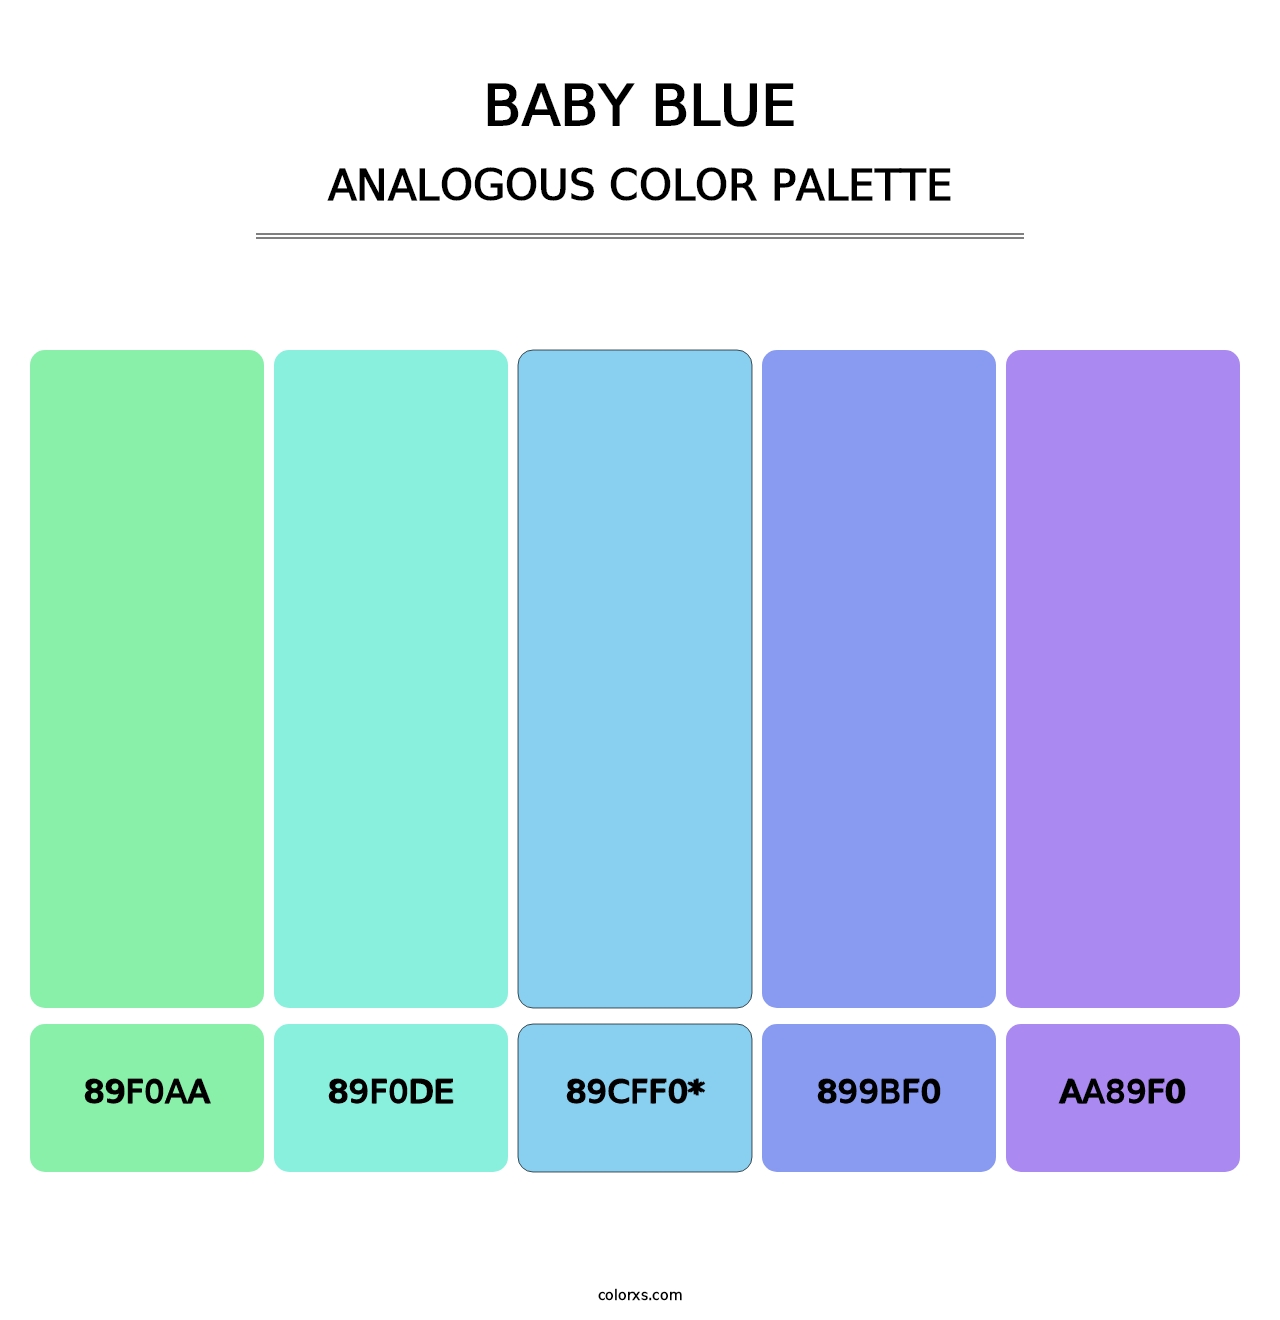 Baby Blue - Analogous Color Palette